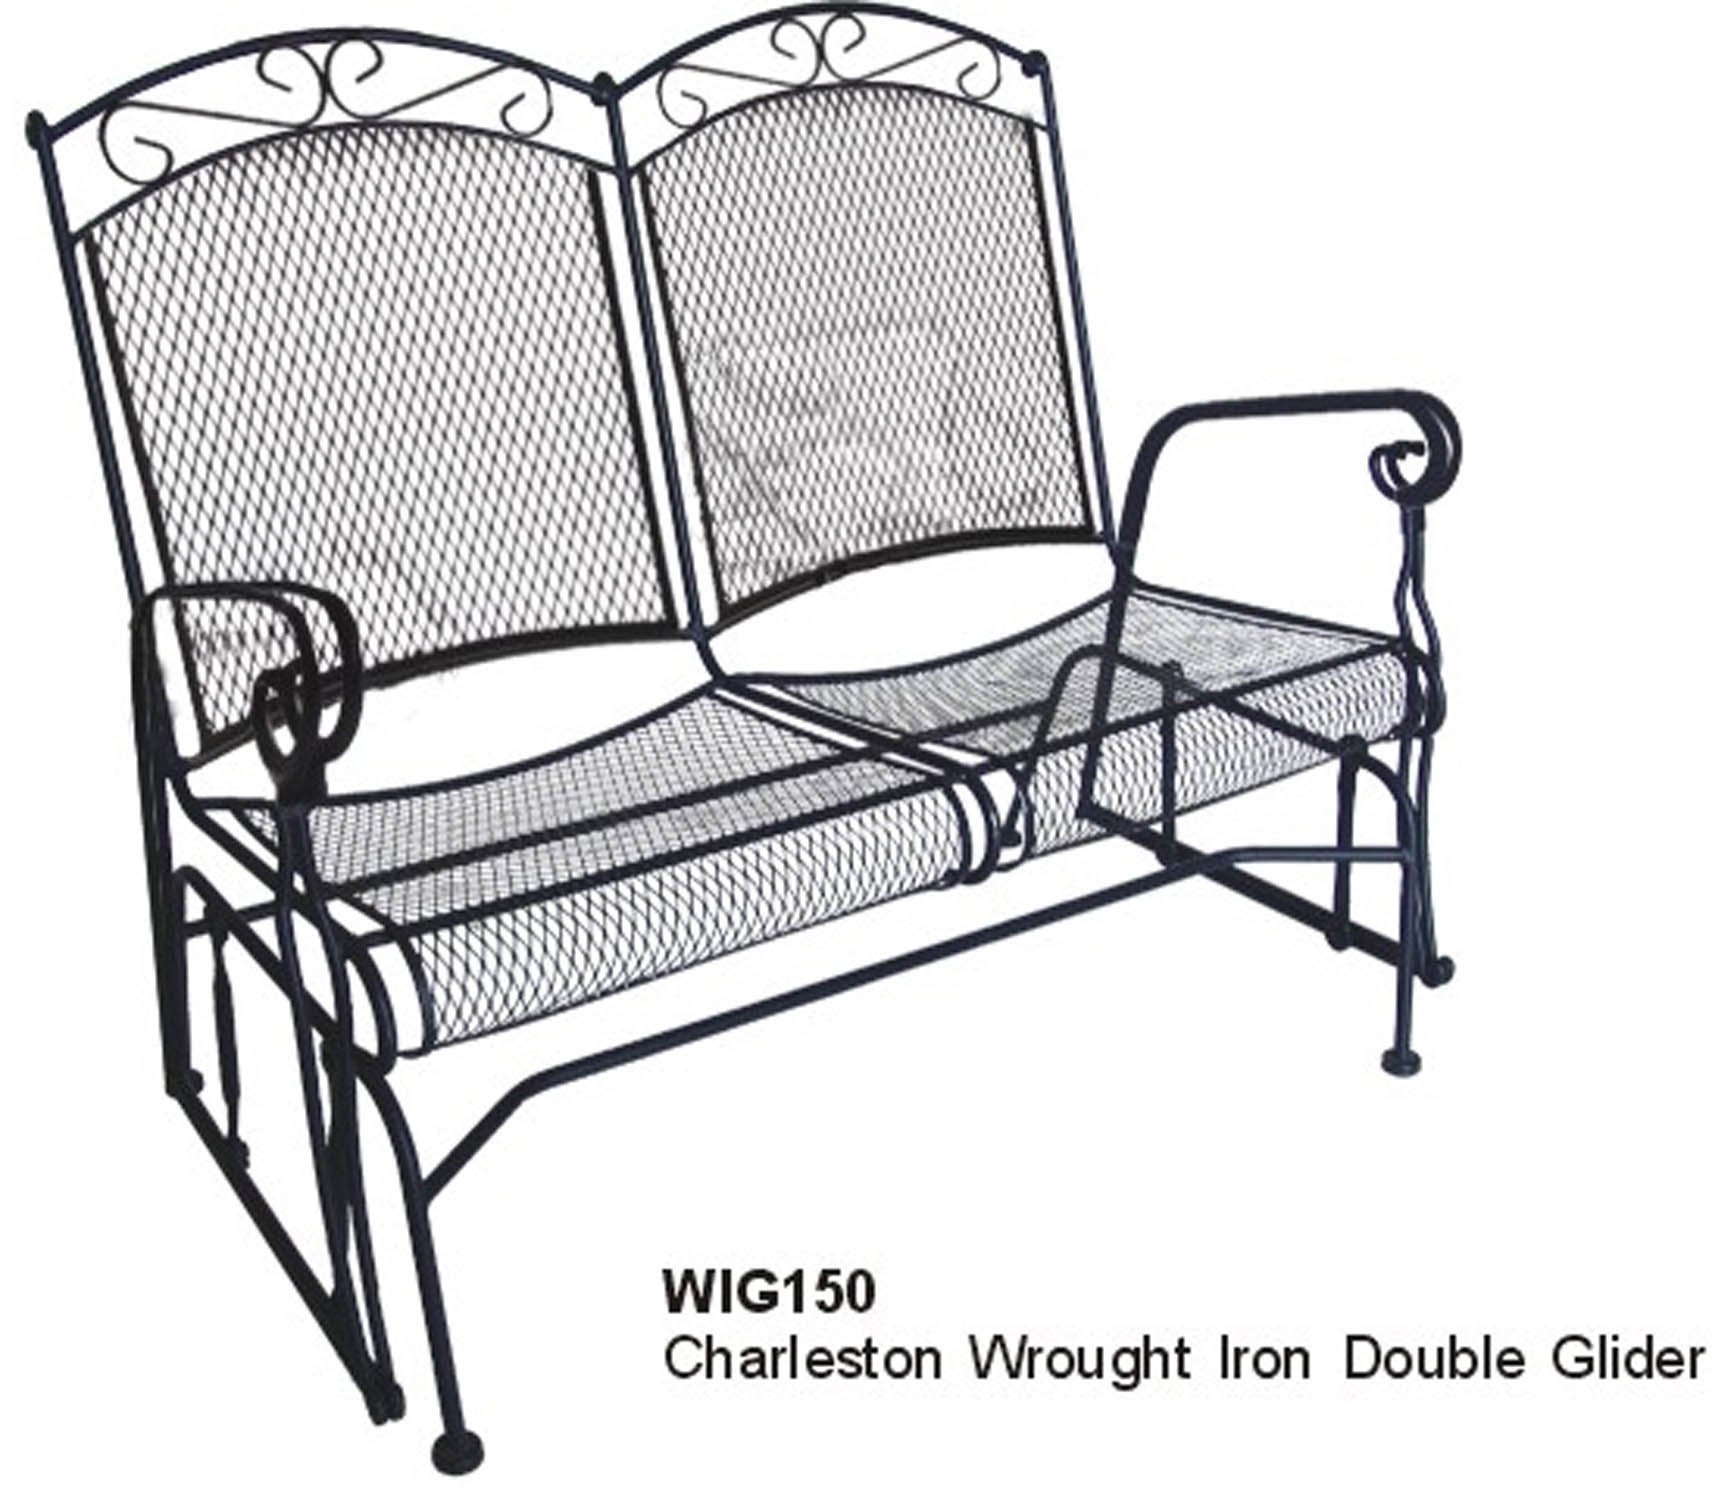 Charleston Wrought Iron Double Glider